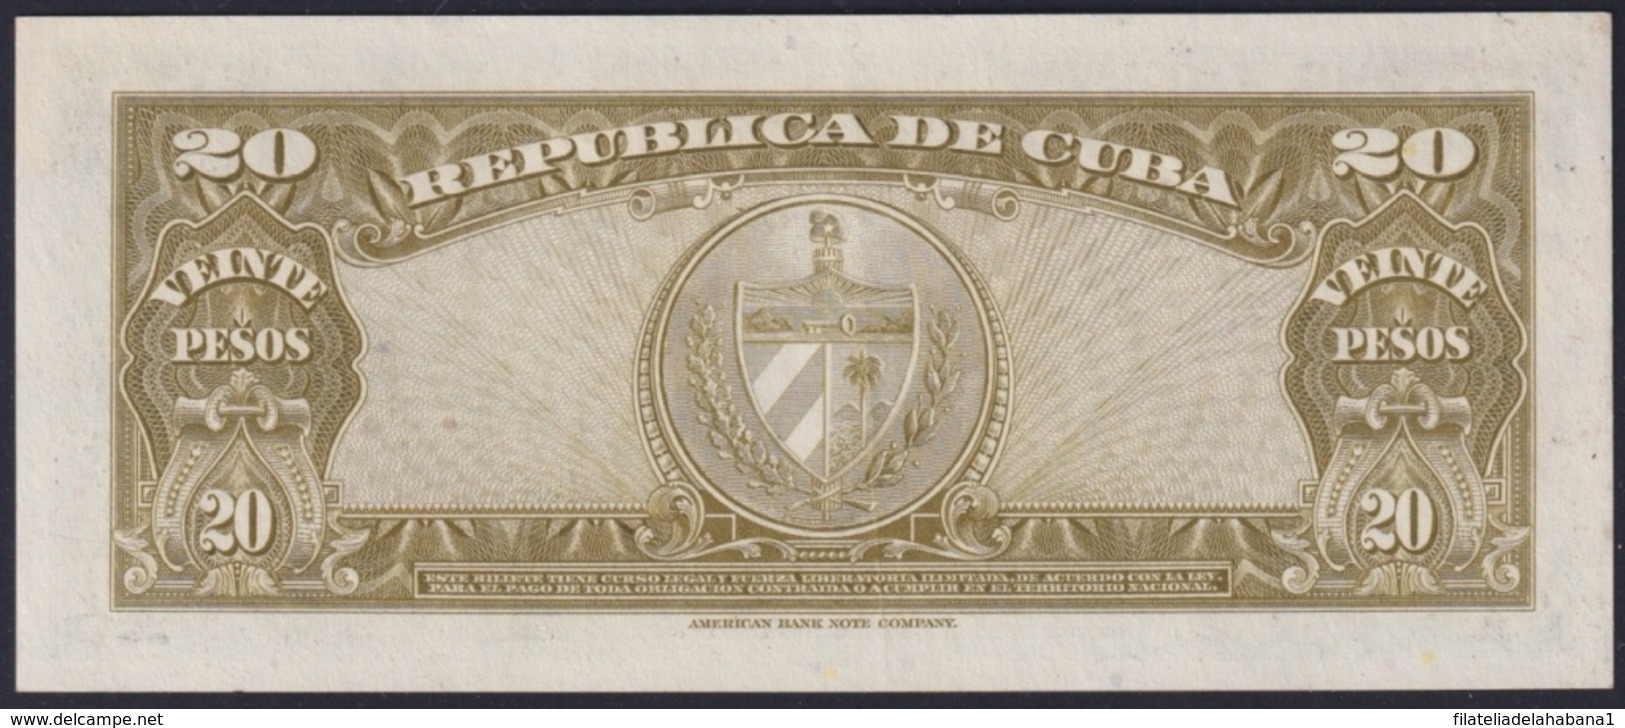 1960-BK-256 CUBA 1960 20$ BANCO NACIONAL SIGNED ERNESTO CHE GUEVARA UNC - Cuba